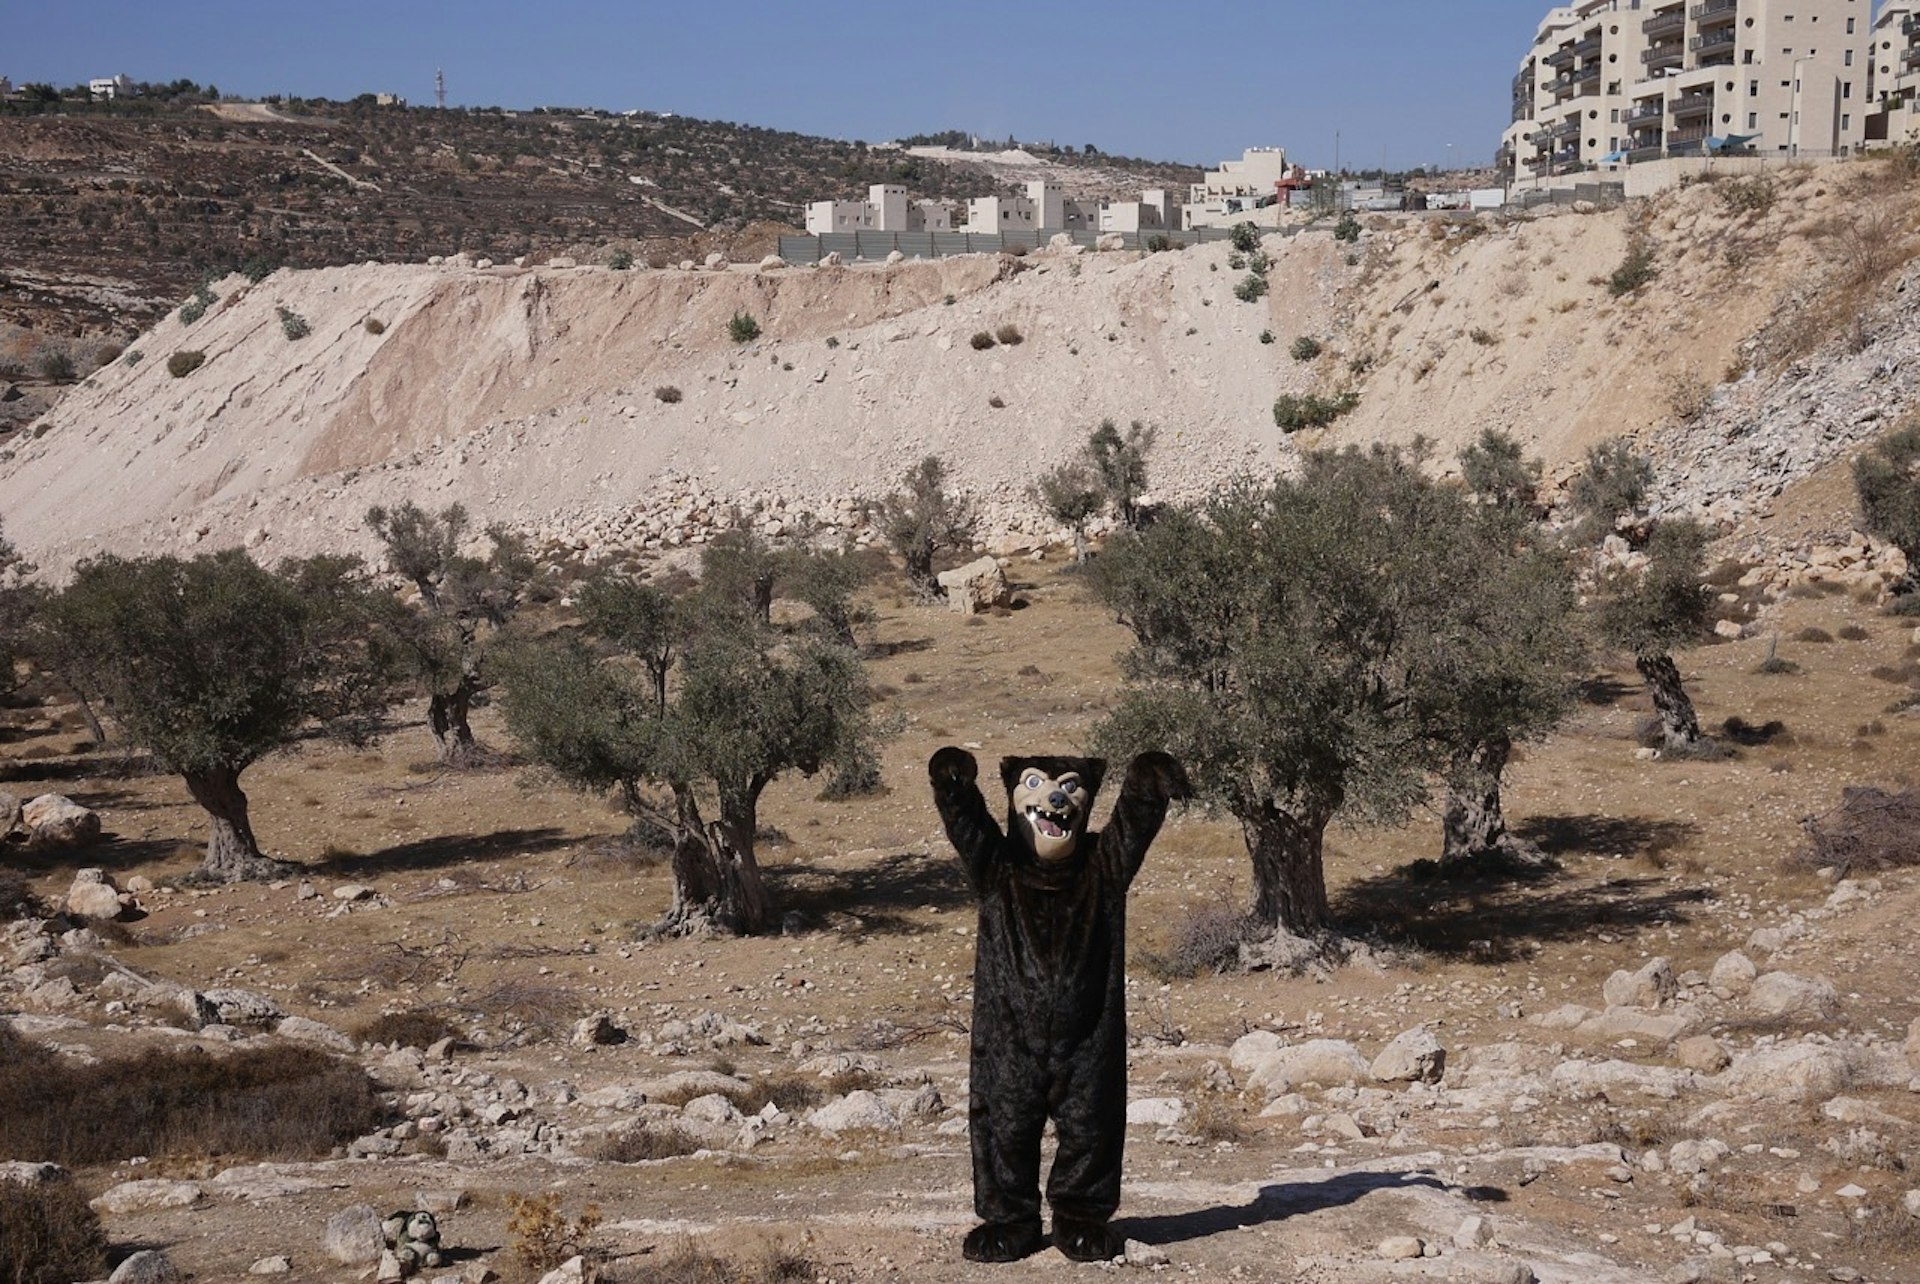 From Hacienda to Palestine, an insight into photographer Nick Waplington's world